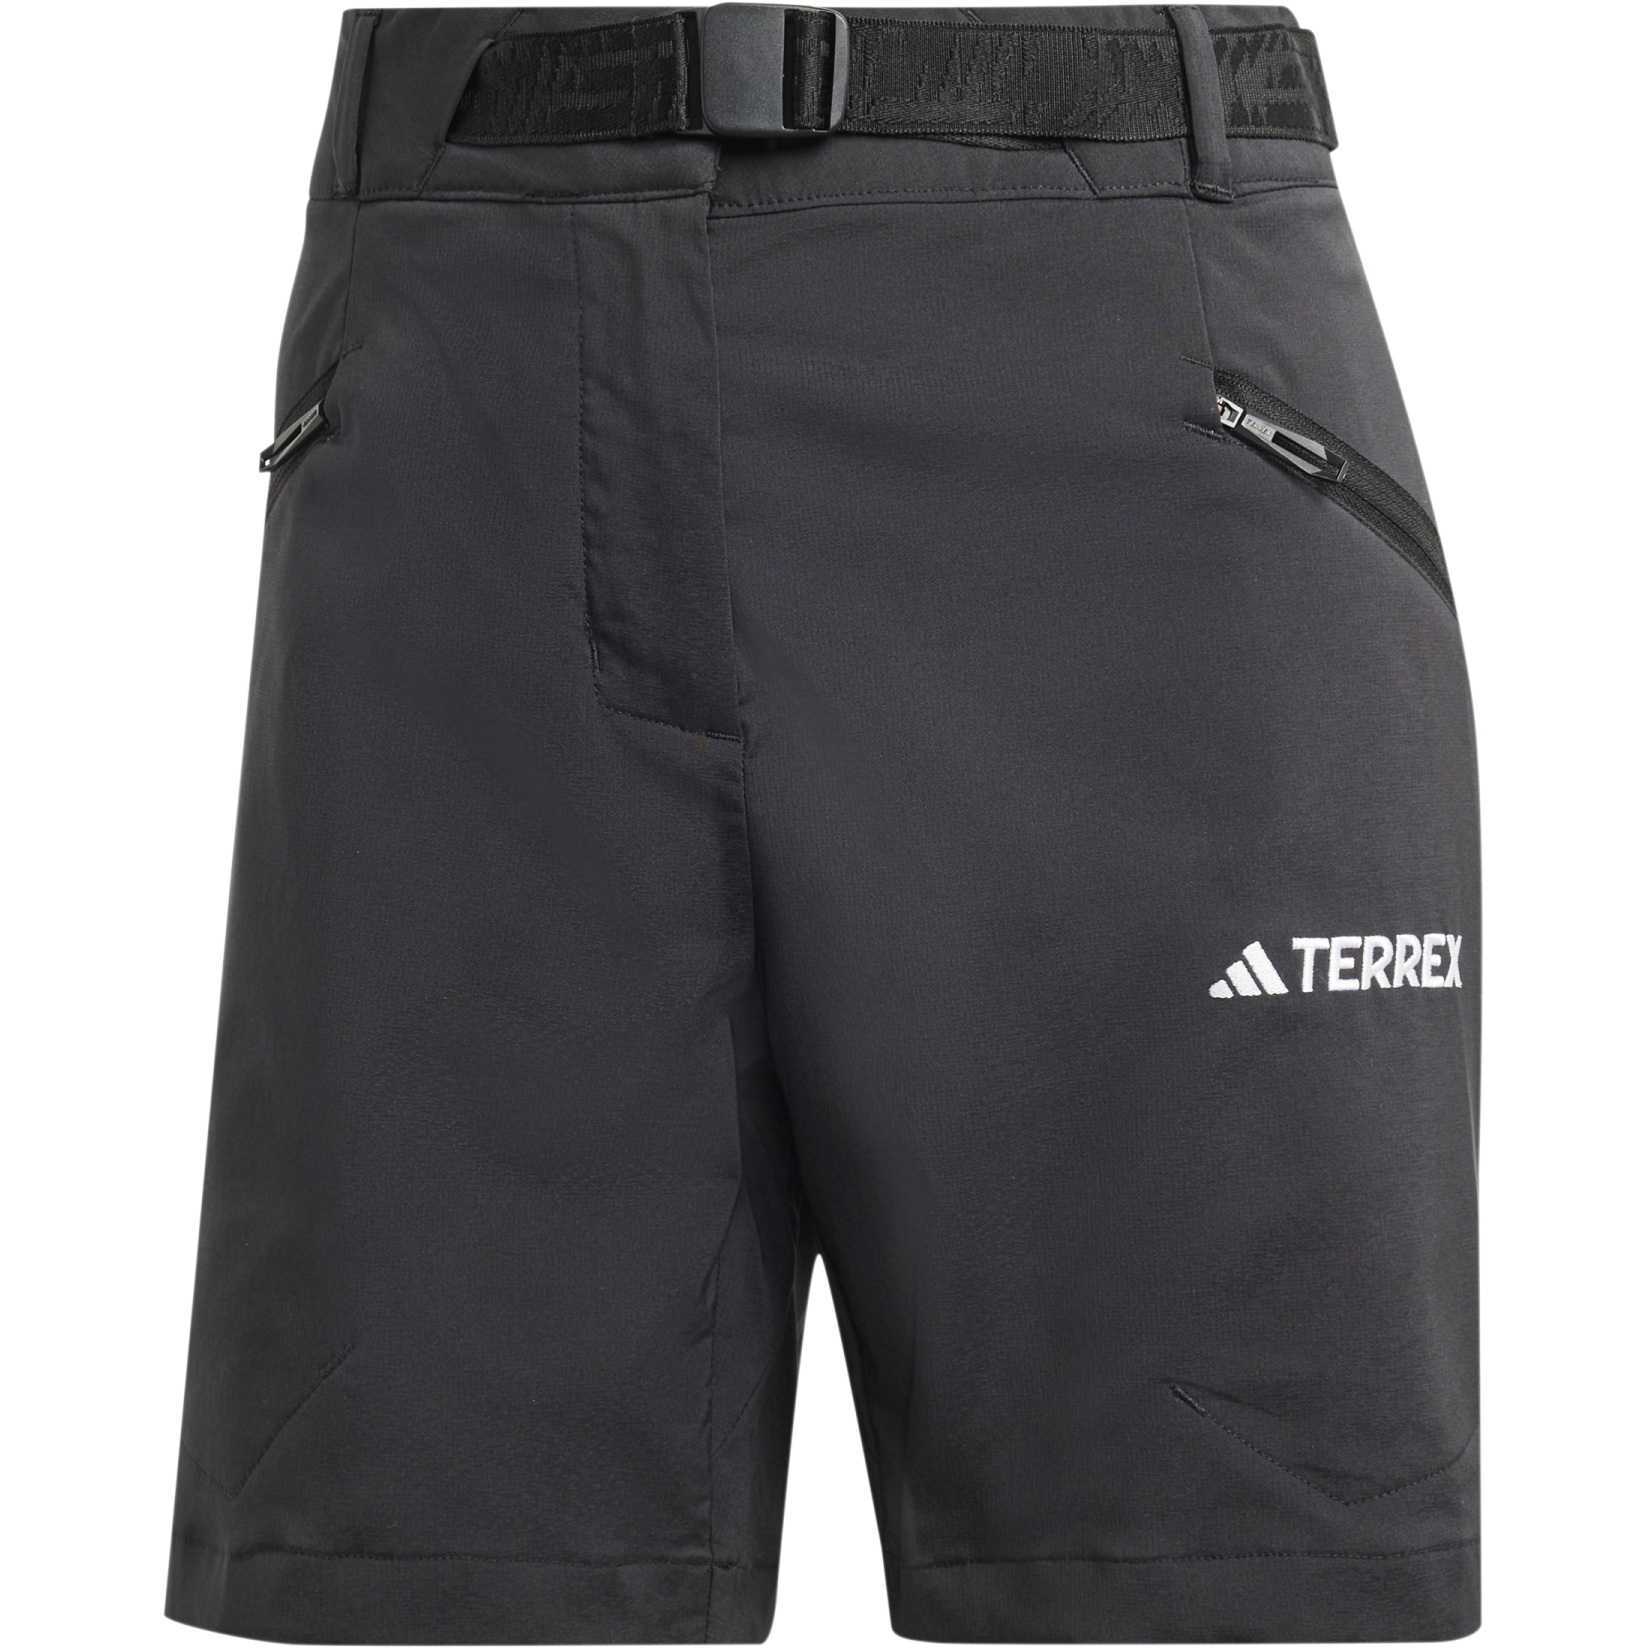 Productfoto van adidas TERREX Xperior Mid Shorts Dames - zwart IP4832